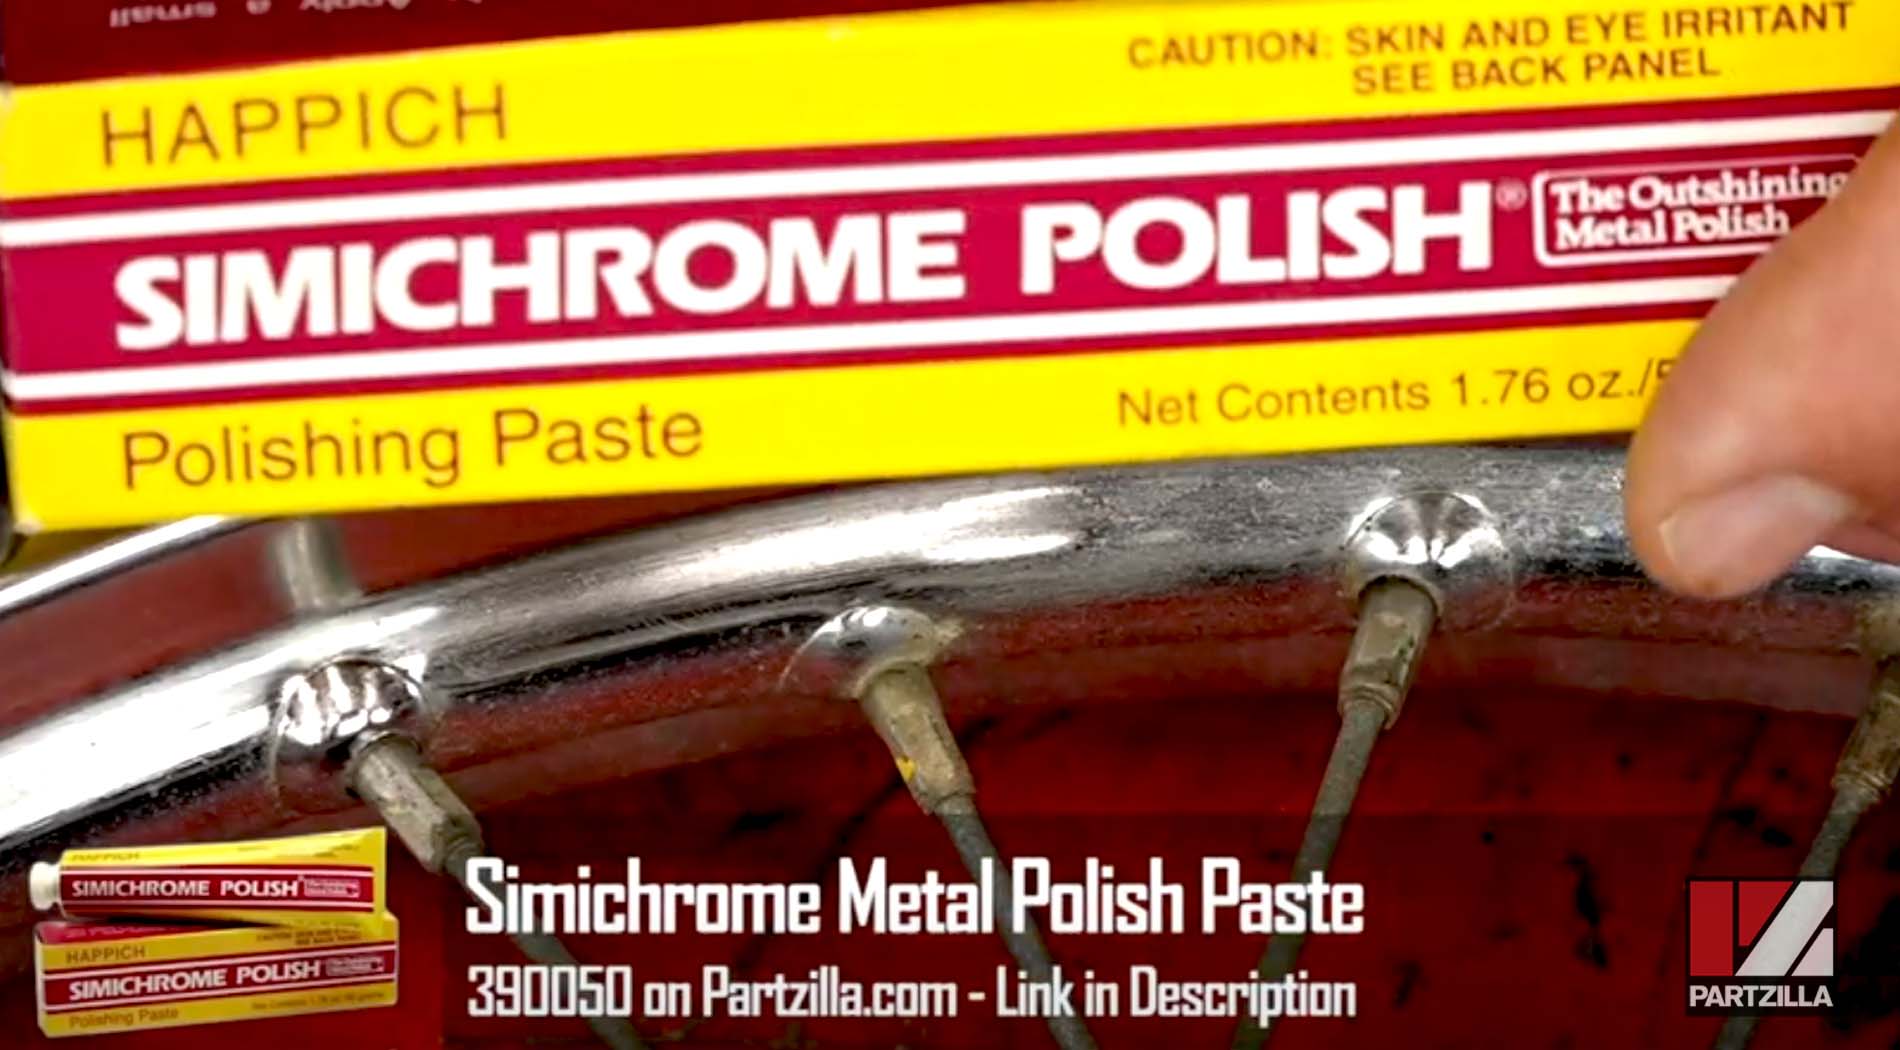 Happich Simichrome metal polish paste